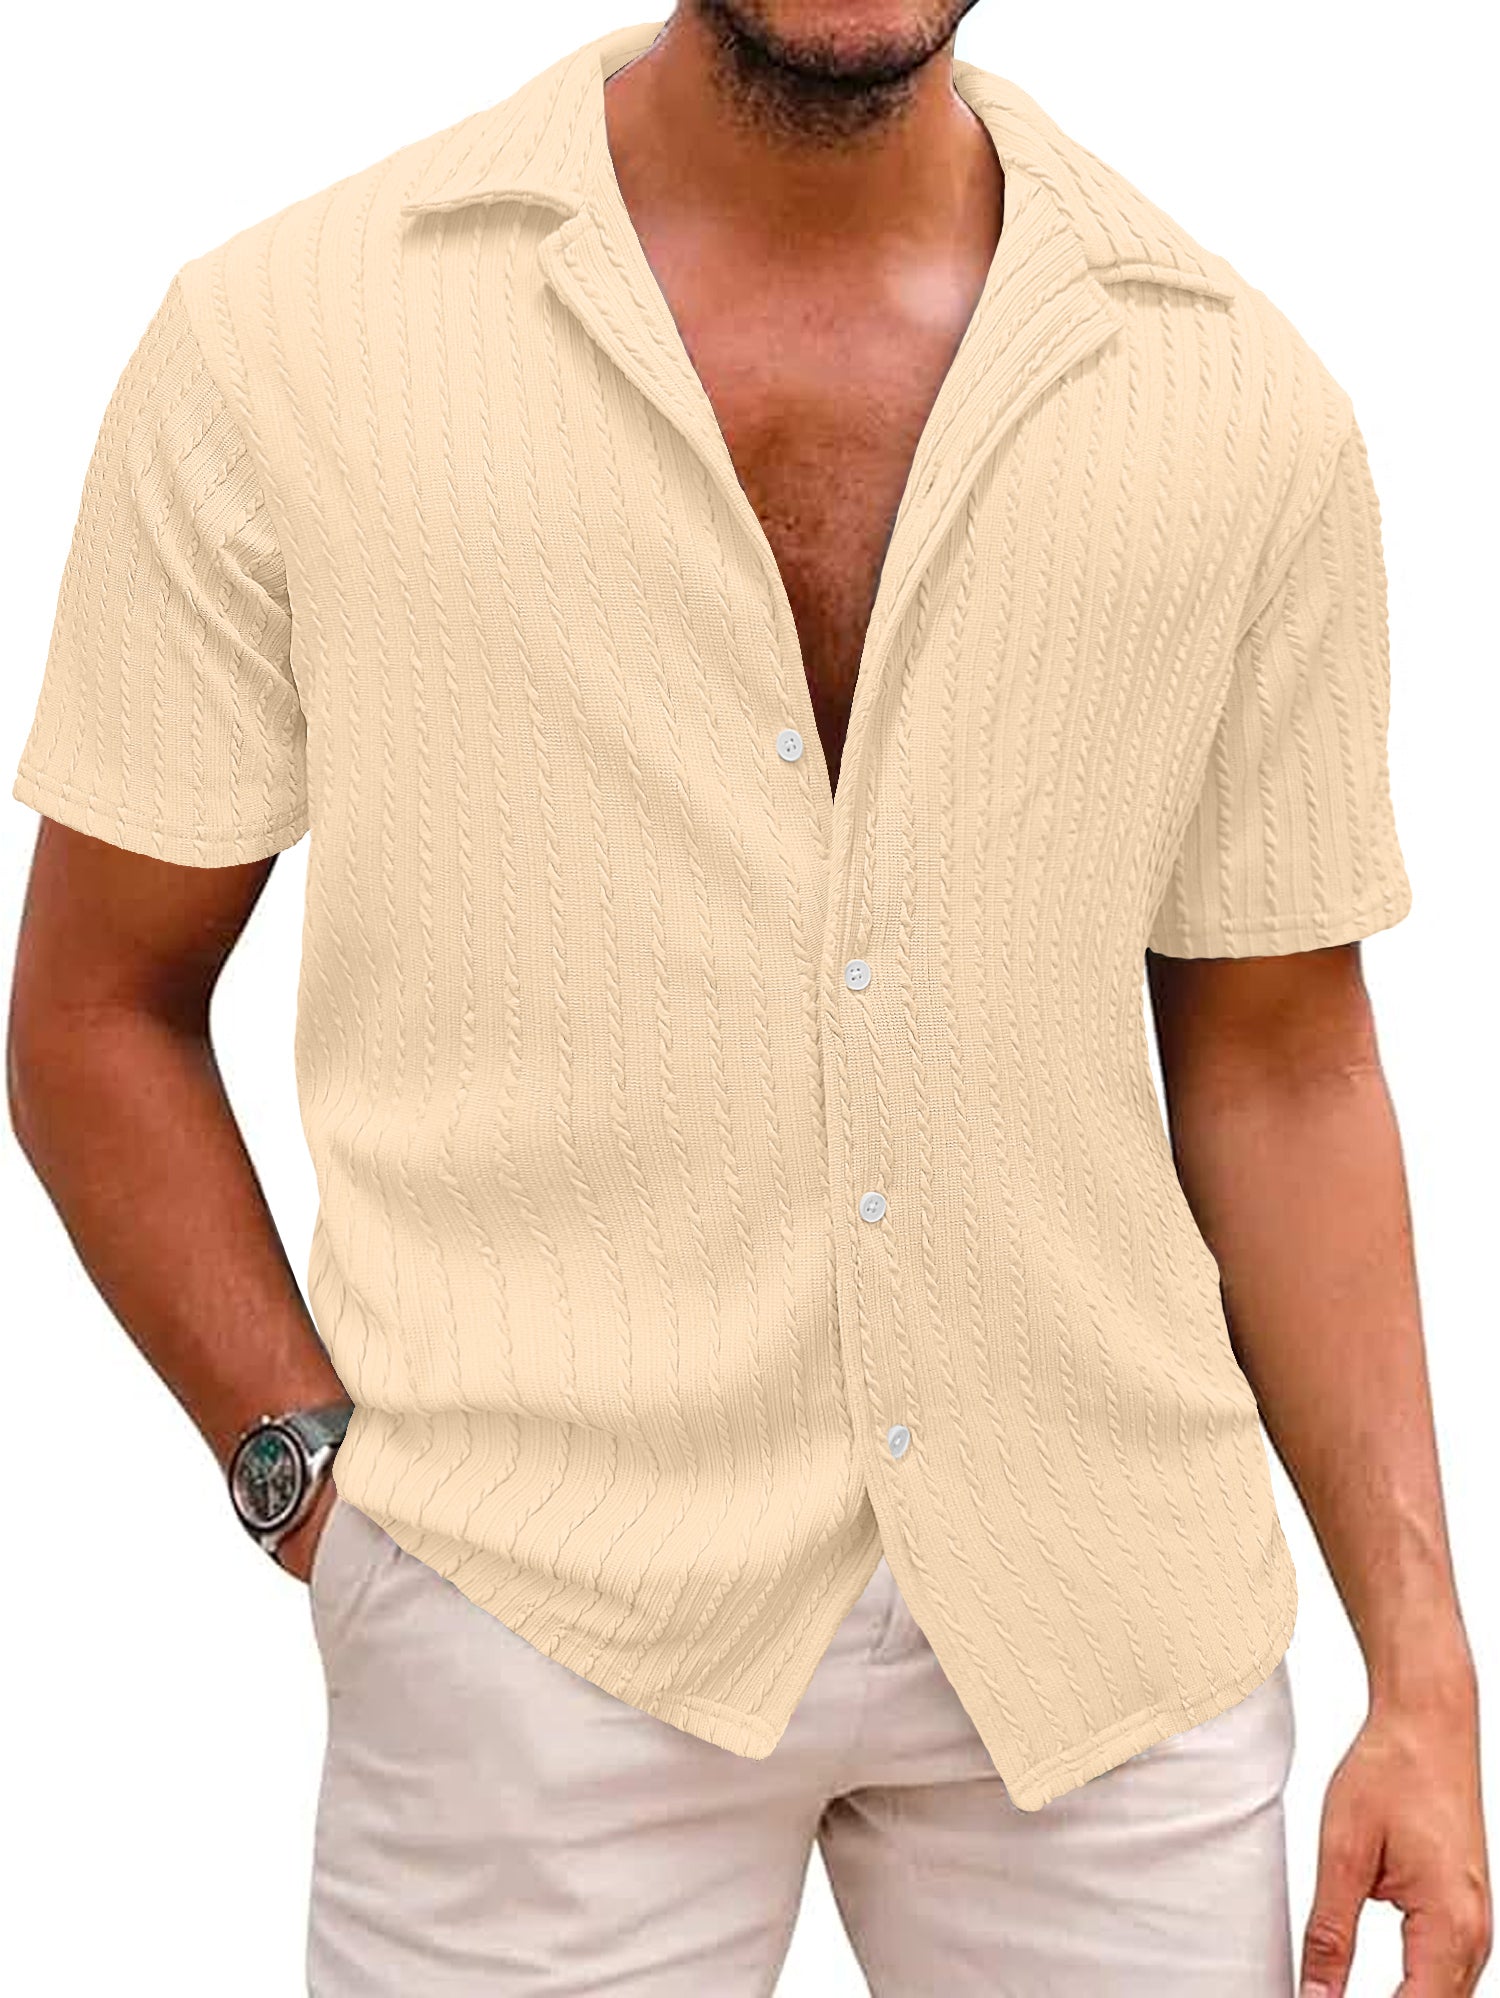 Comdecevis Men's Button Down Knit Shirts Short Sleeve Vintage Textured